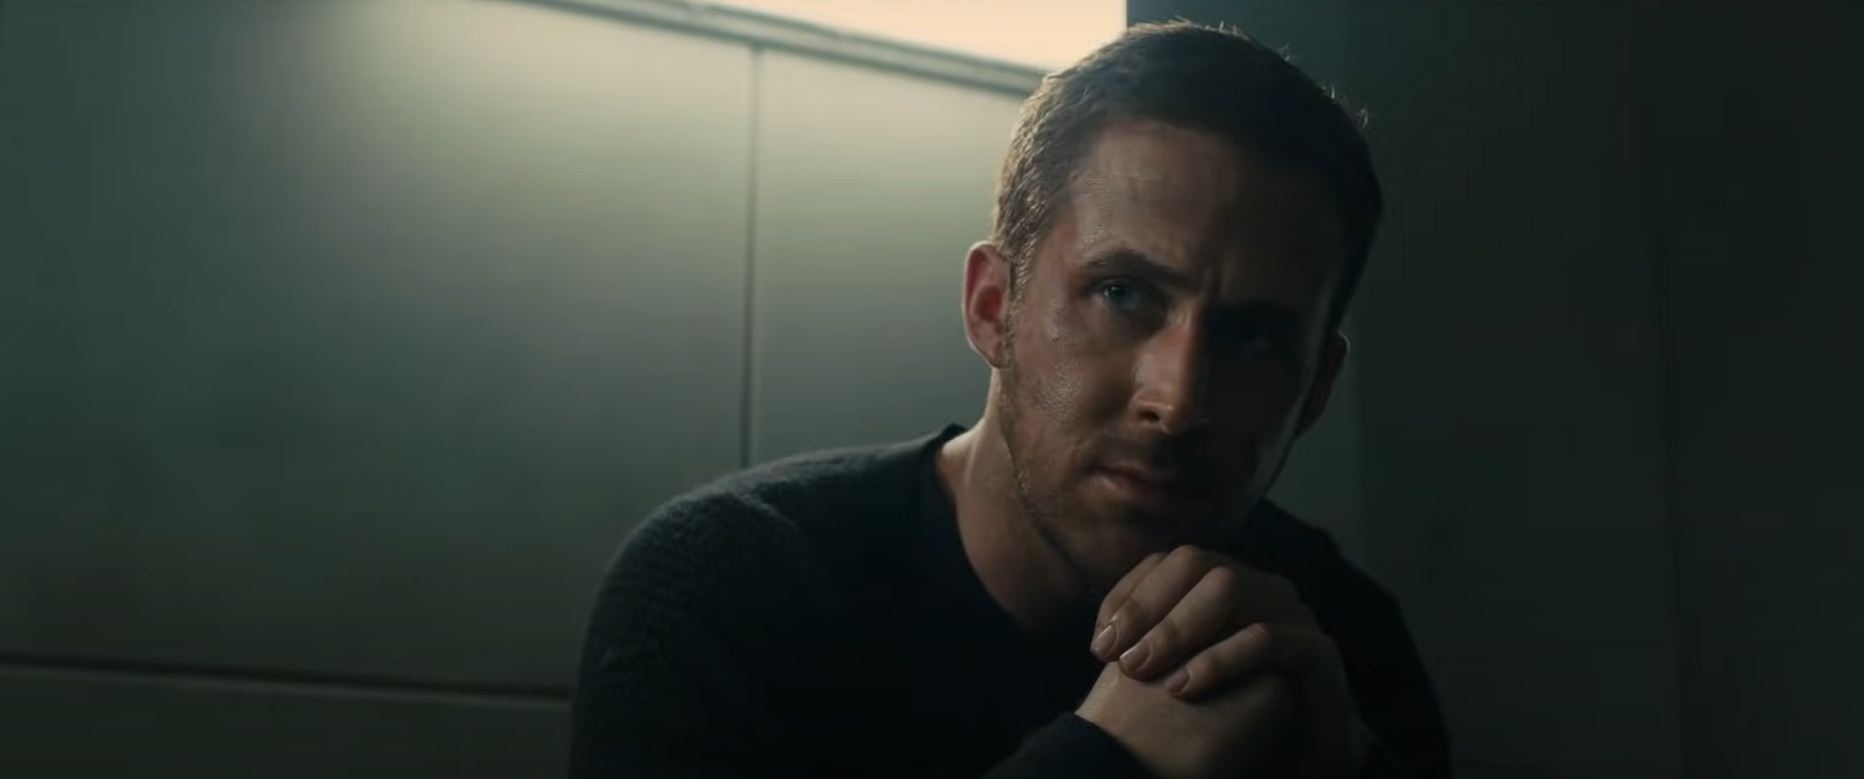 Ryan Gosling - Blade Runner 2049 ©20th Century Fox